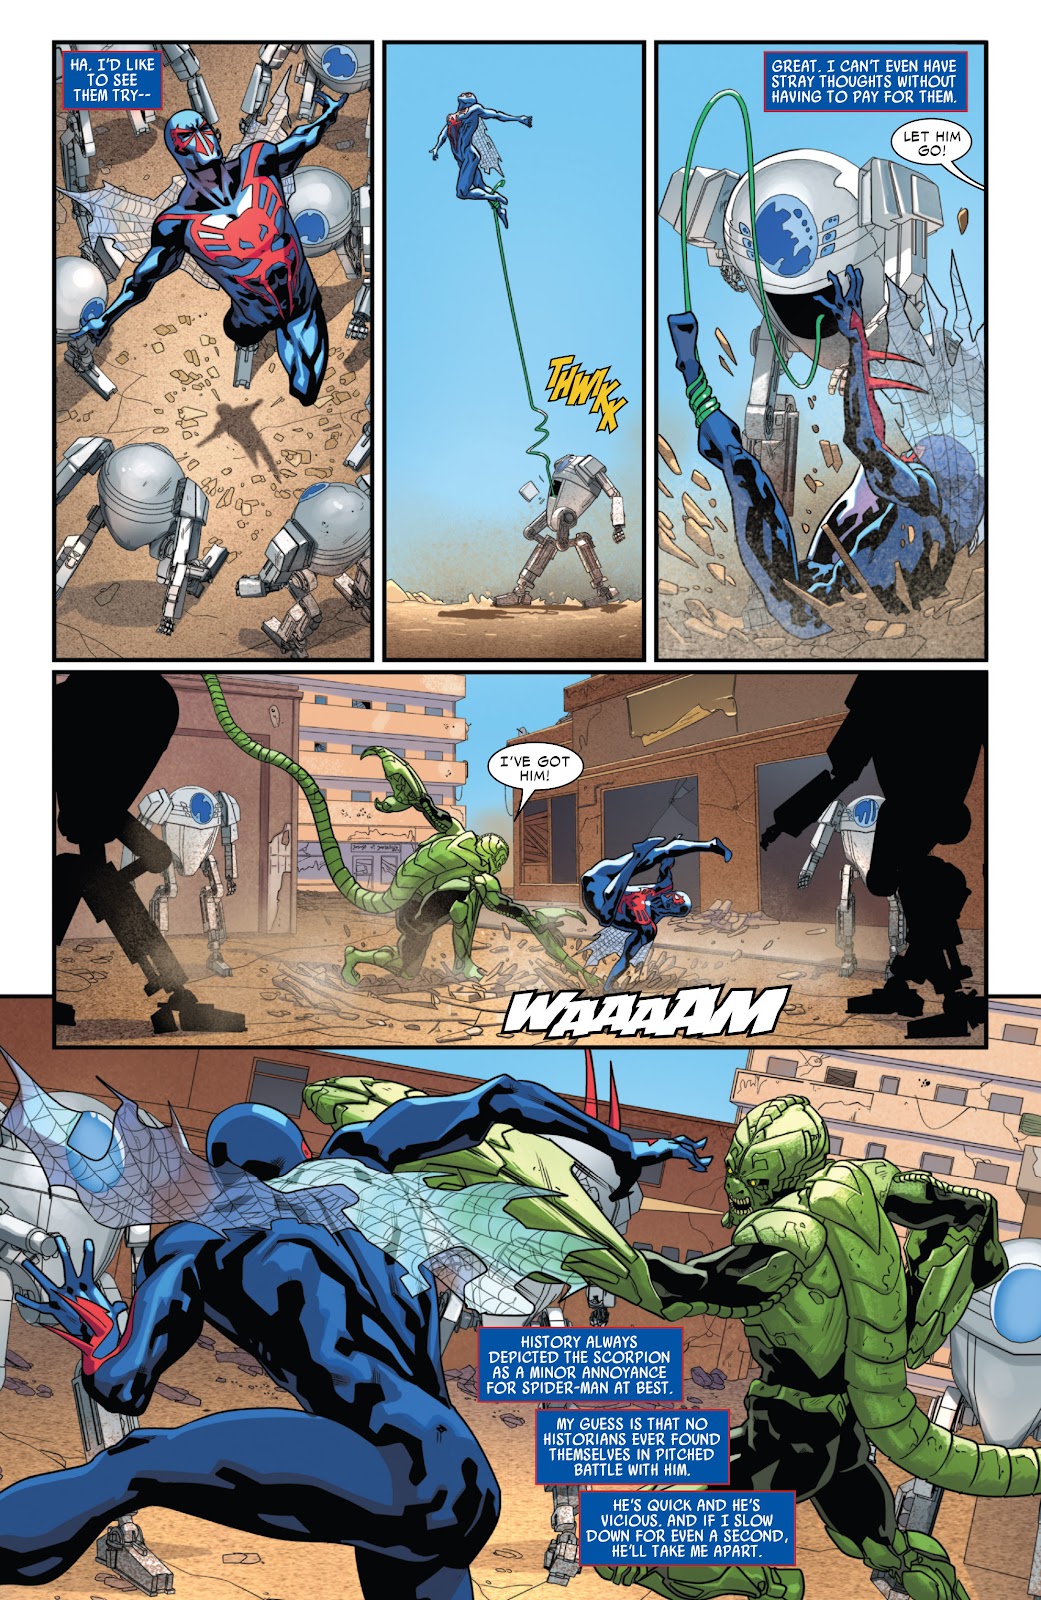 Spider-Man 2099 (2014) issue 4 - Page 6